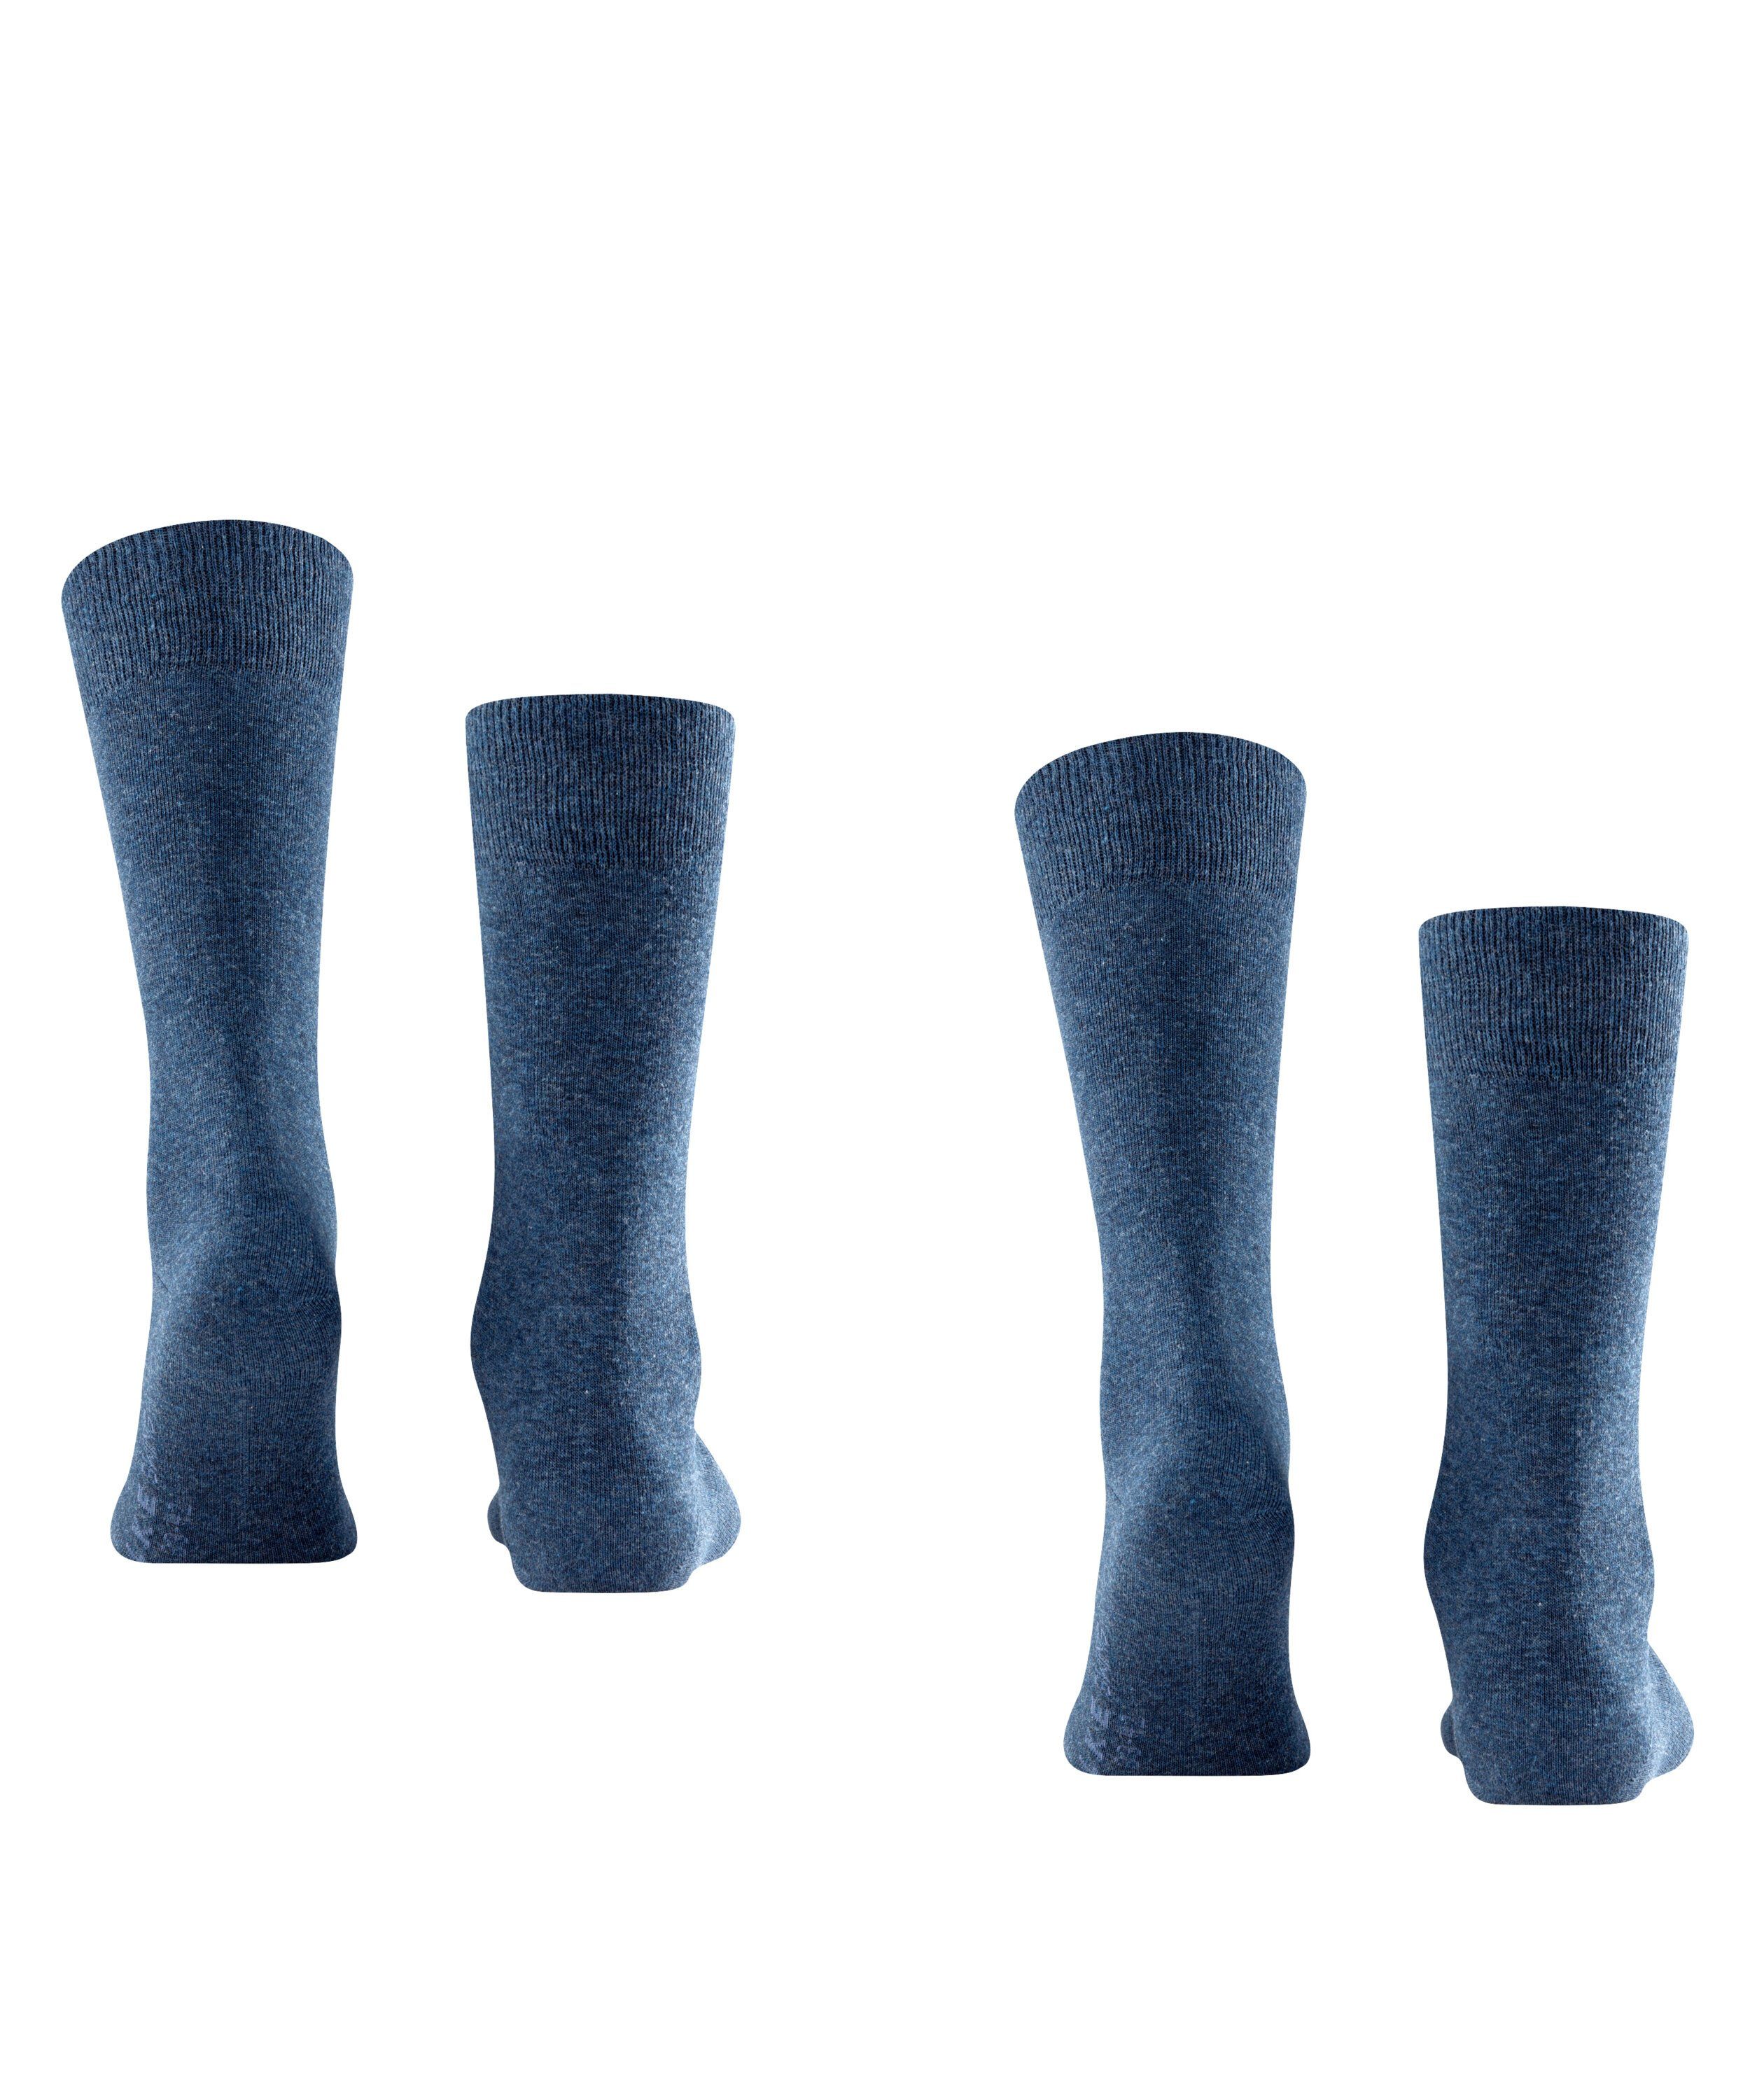 Wäsche/Bademode Socken FALKE Socken Swing 2-Pack (2-Paar) mit angenehmer Baumwolle